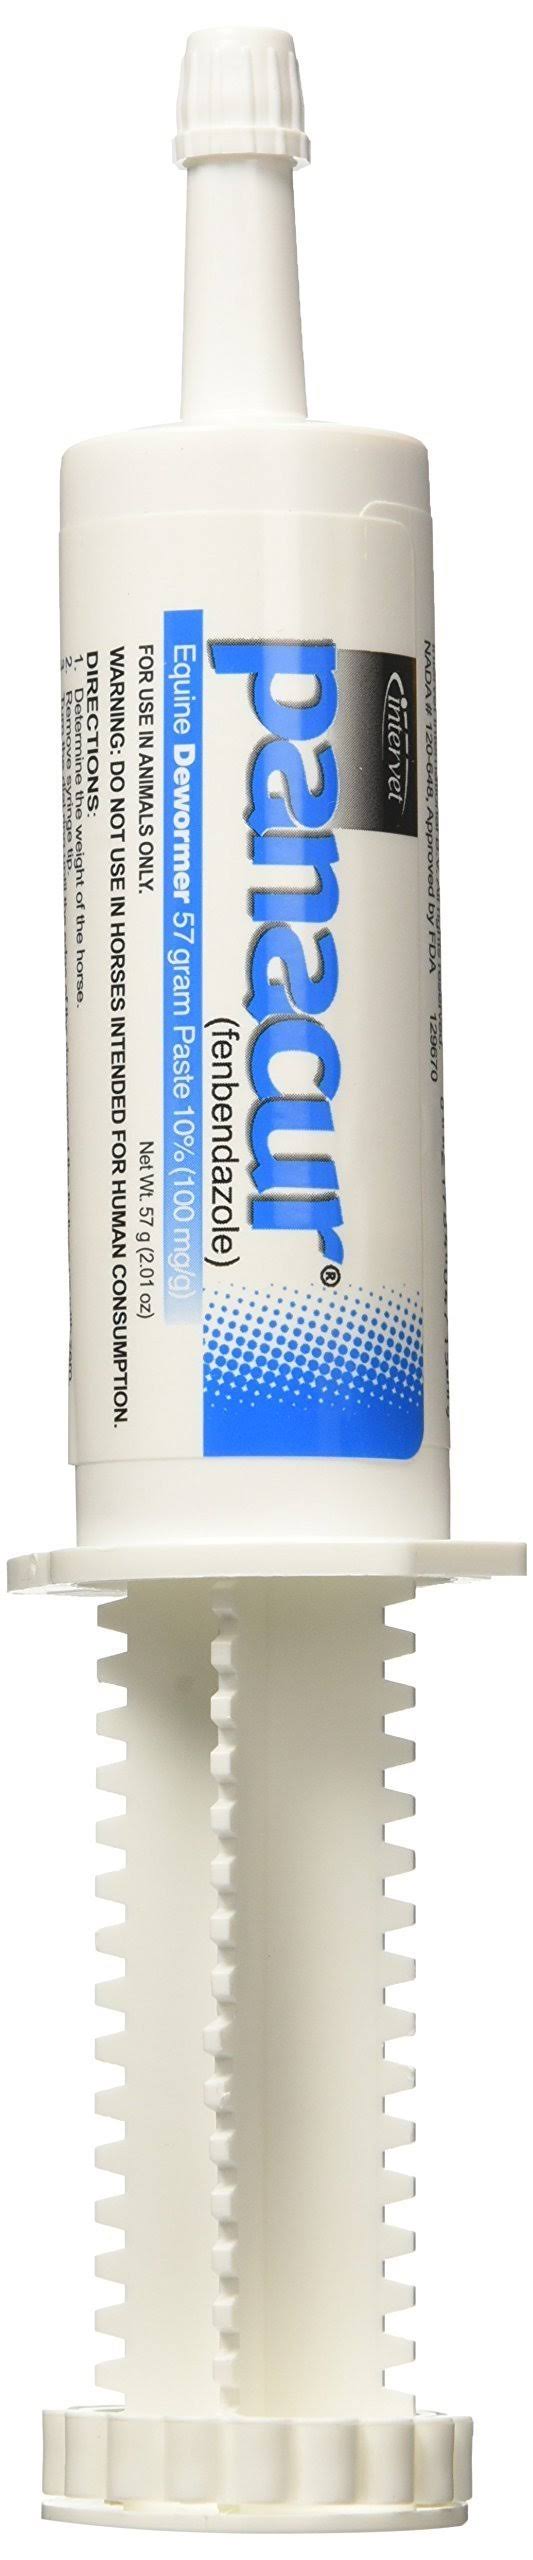 Merck ANIML HEALTH/DURVET Panacur Powerpac Dewormr Fenbendazole 1 Pack 57 Gram Paste 10%